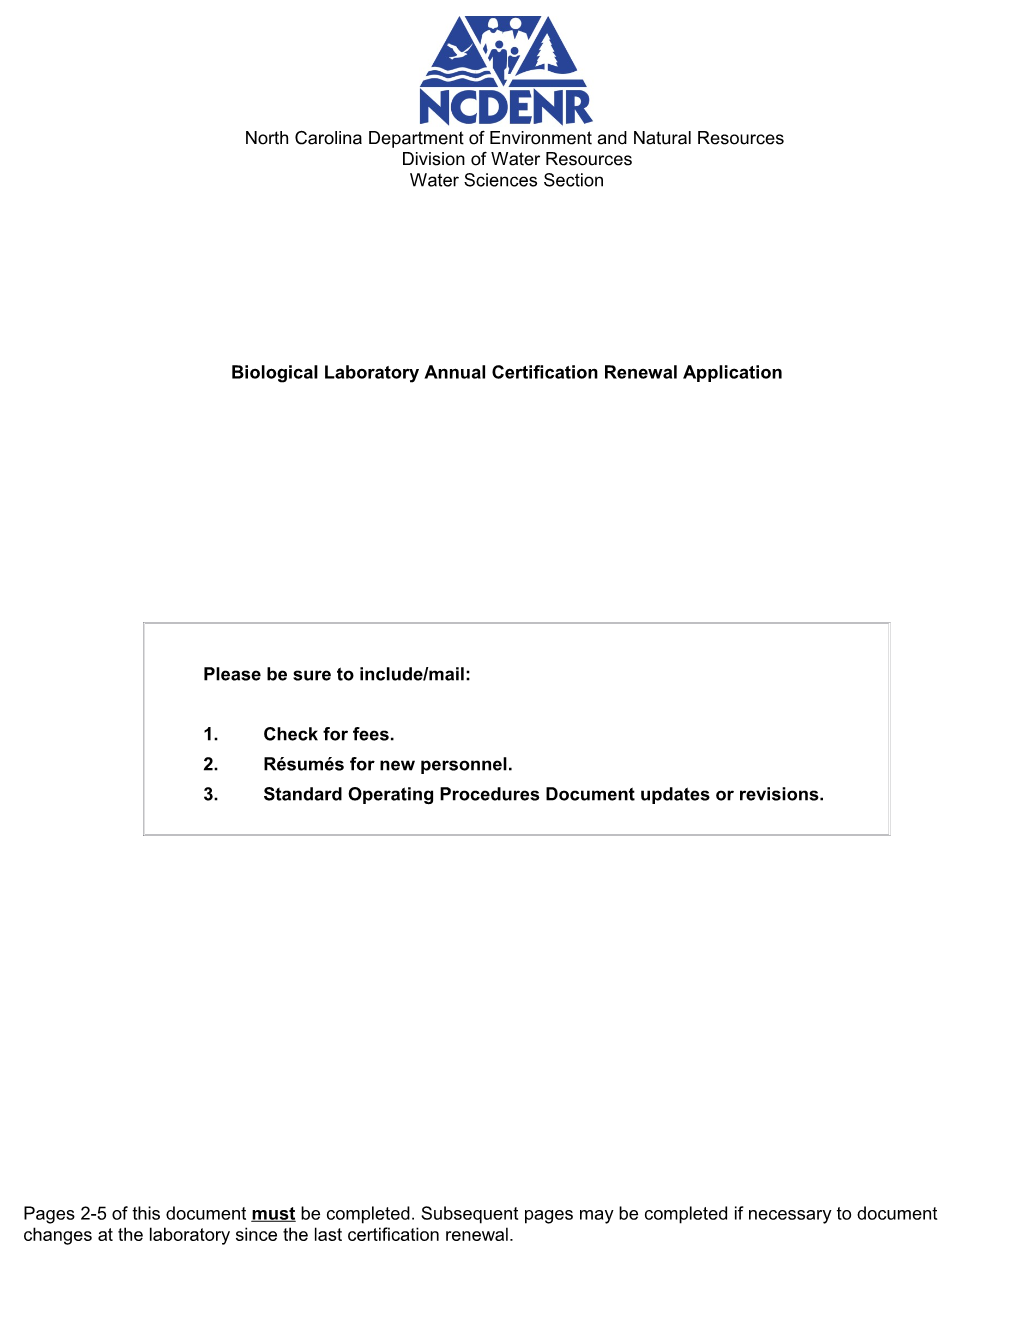 North Carolina Biological Laboratory Annual Certification Renewal Application 1